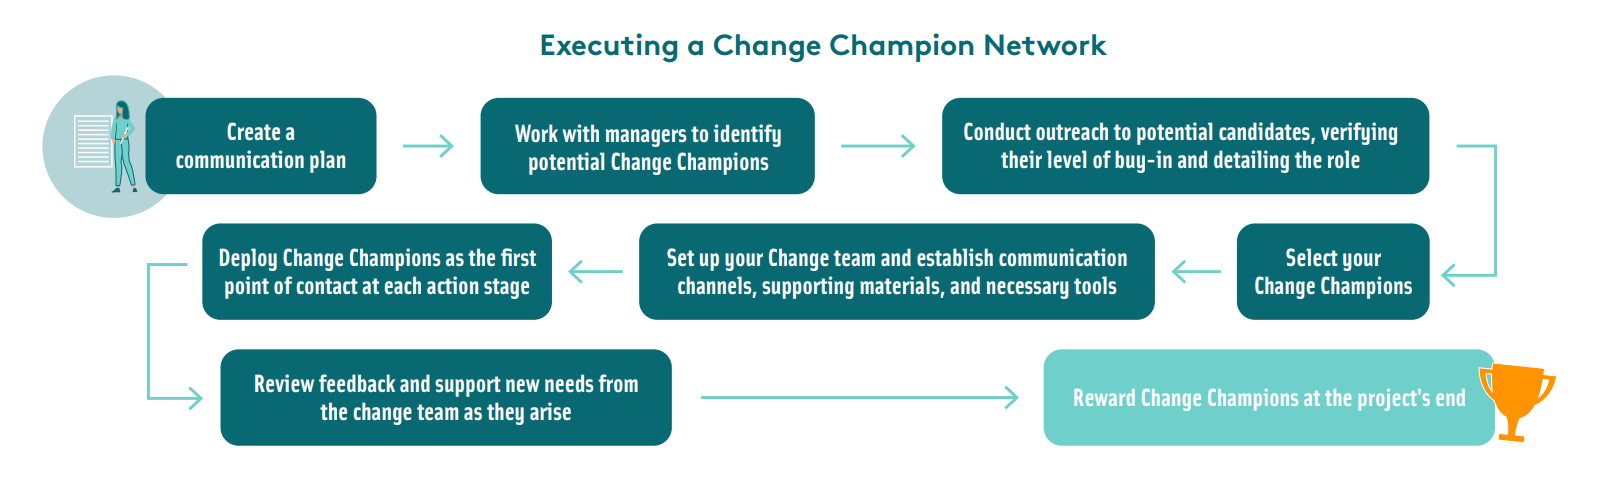 Change management - network